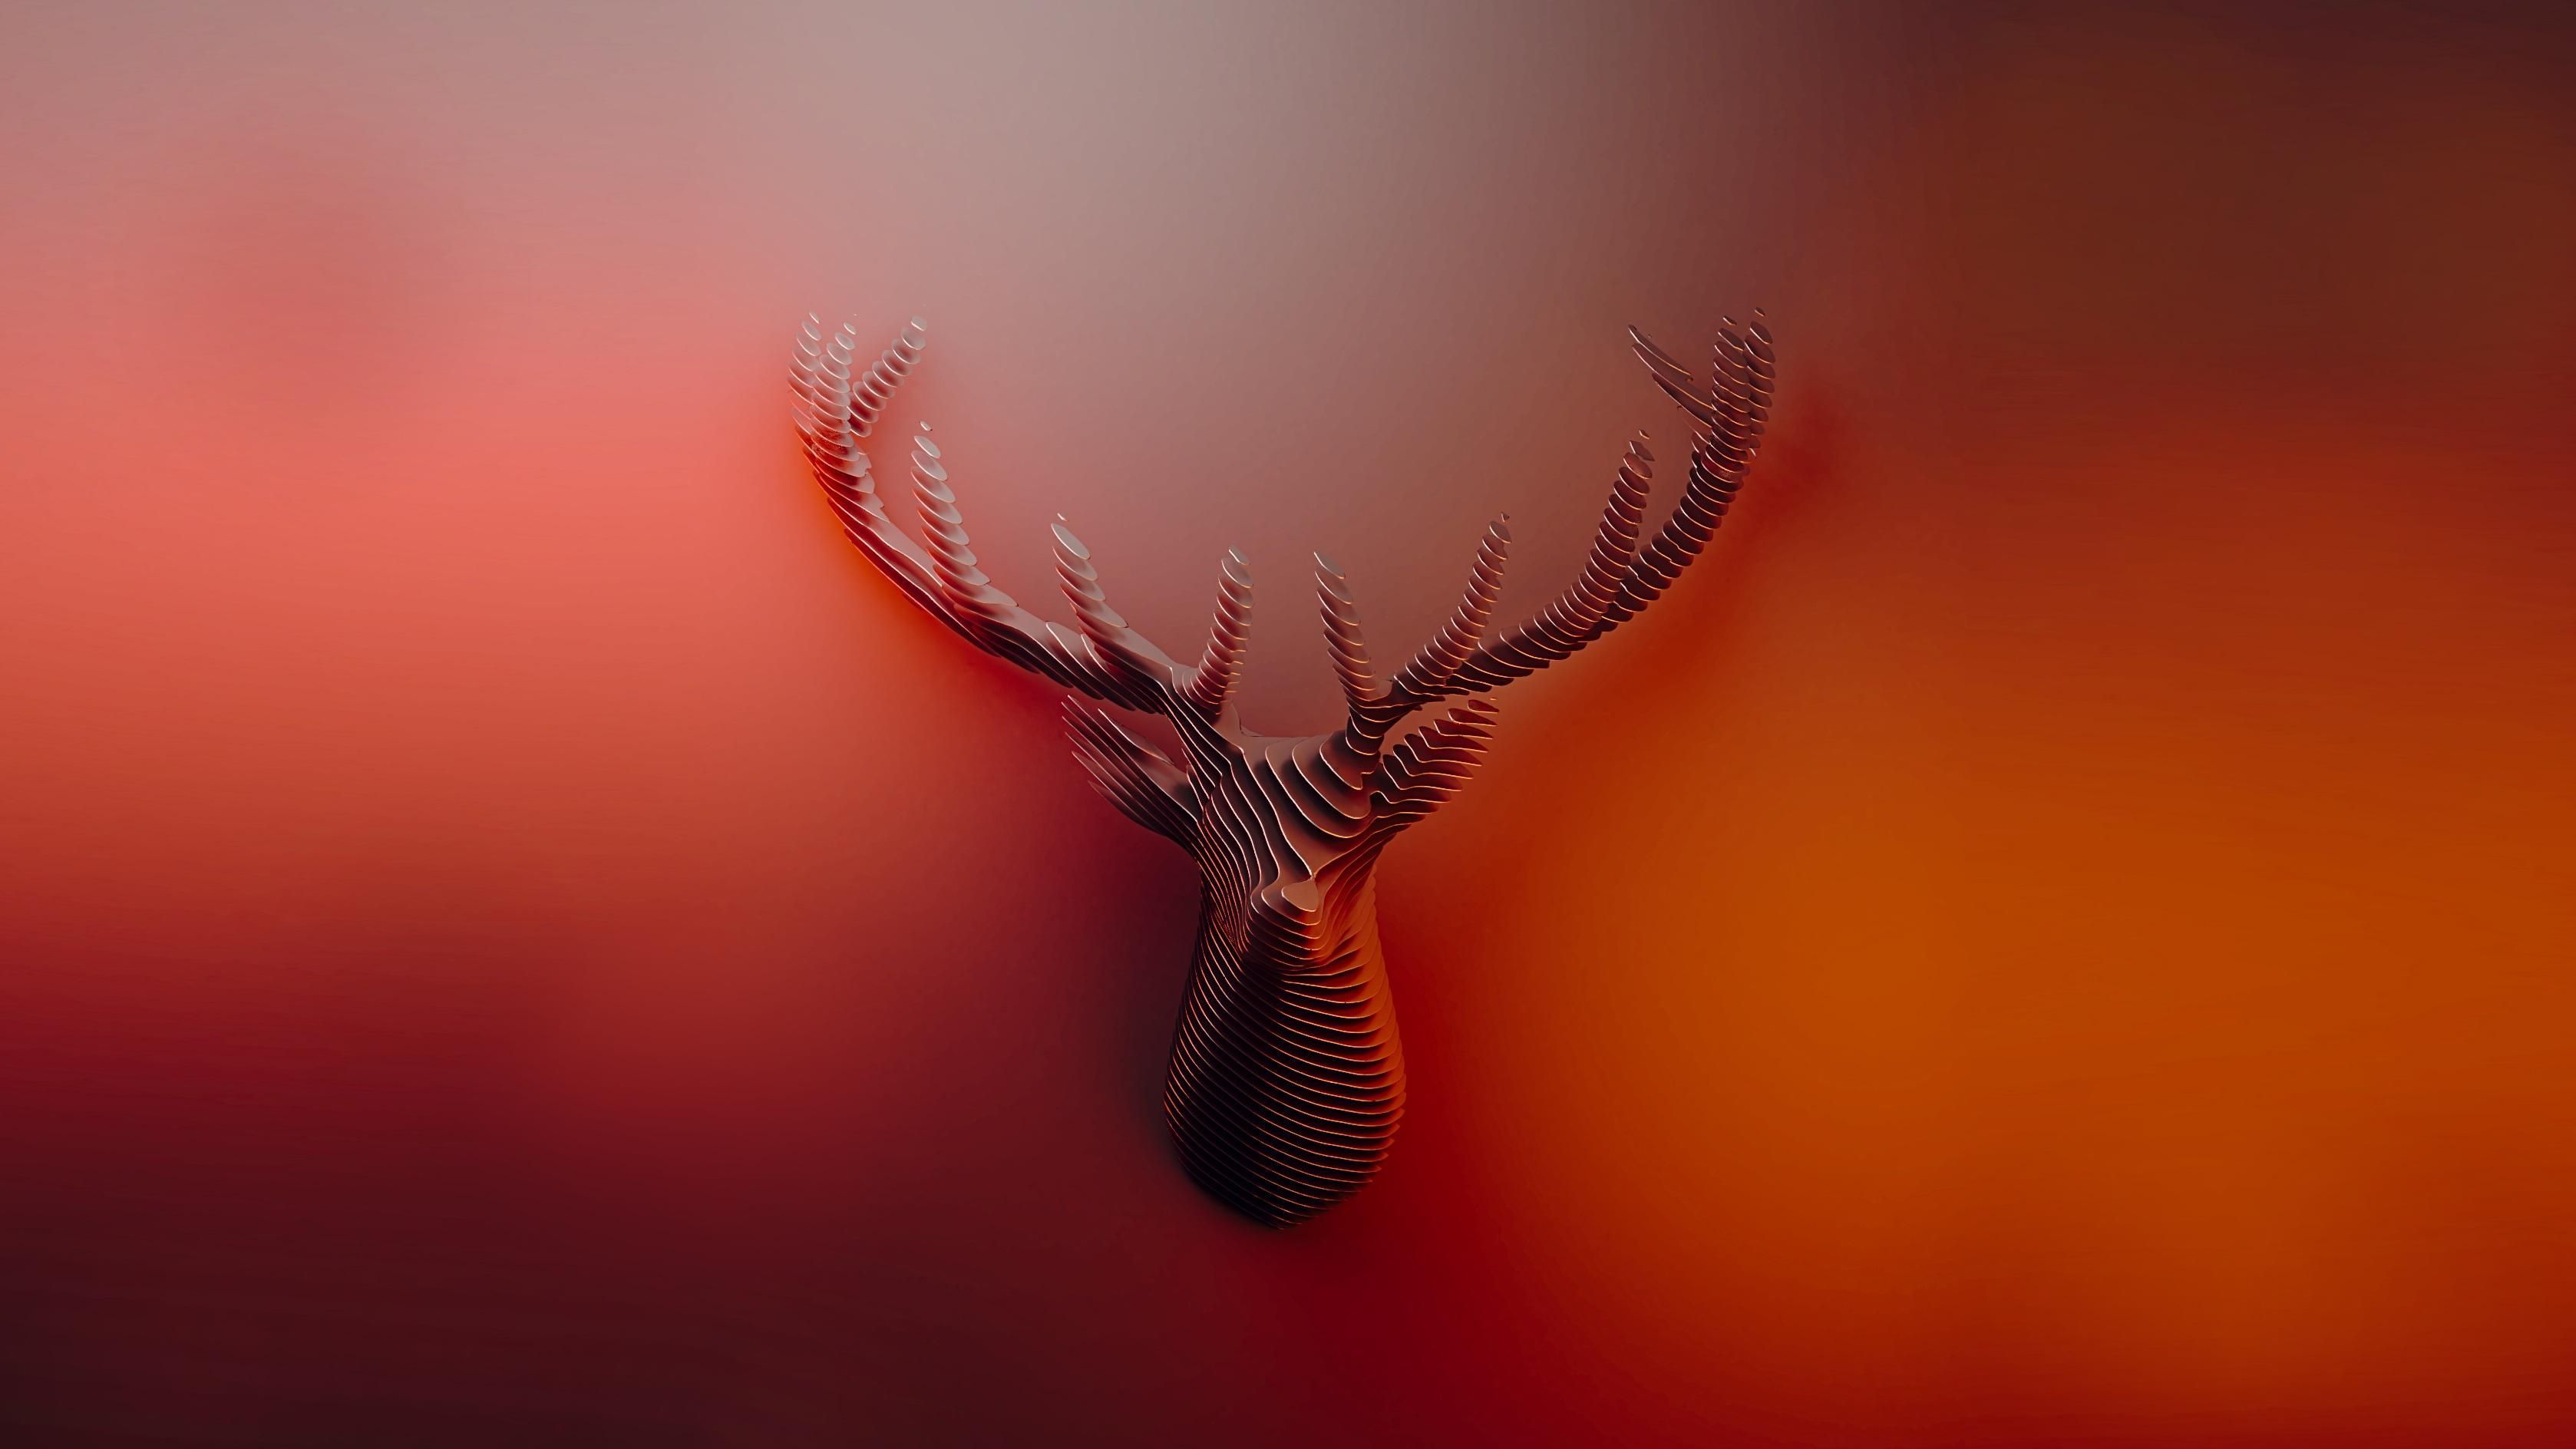 Abstract Deer Wallpaper Free Abstract Deer Background